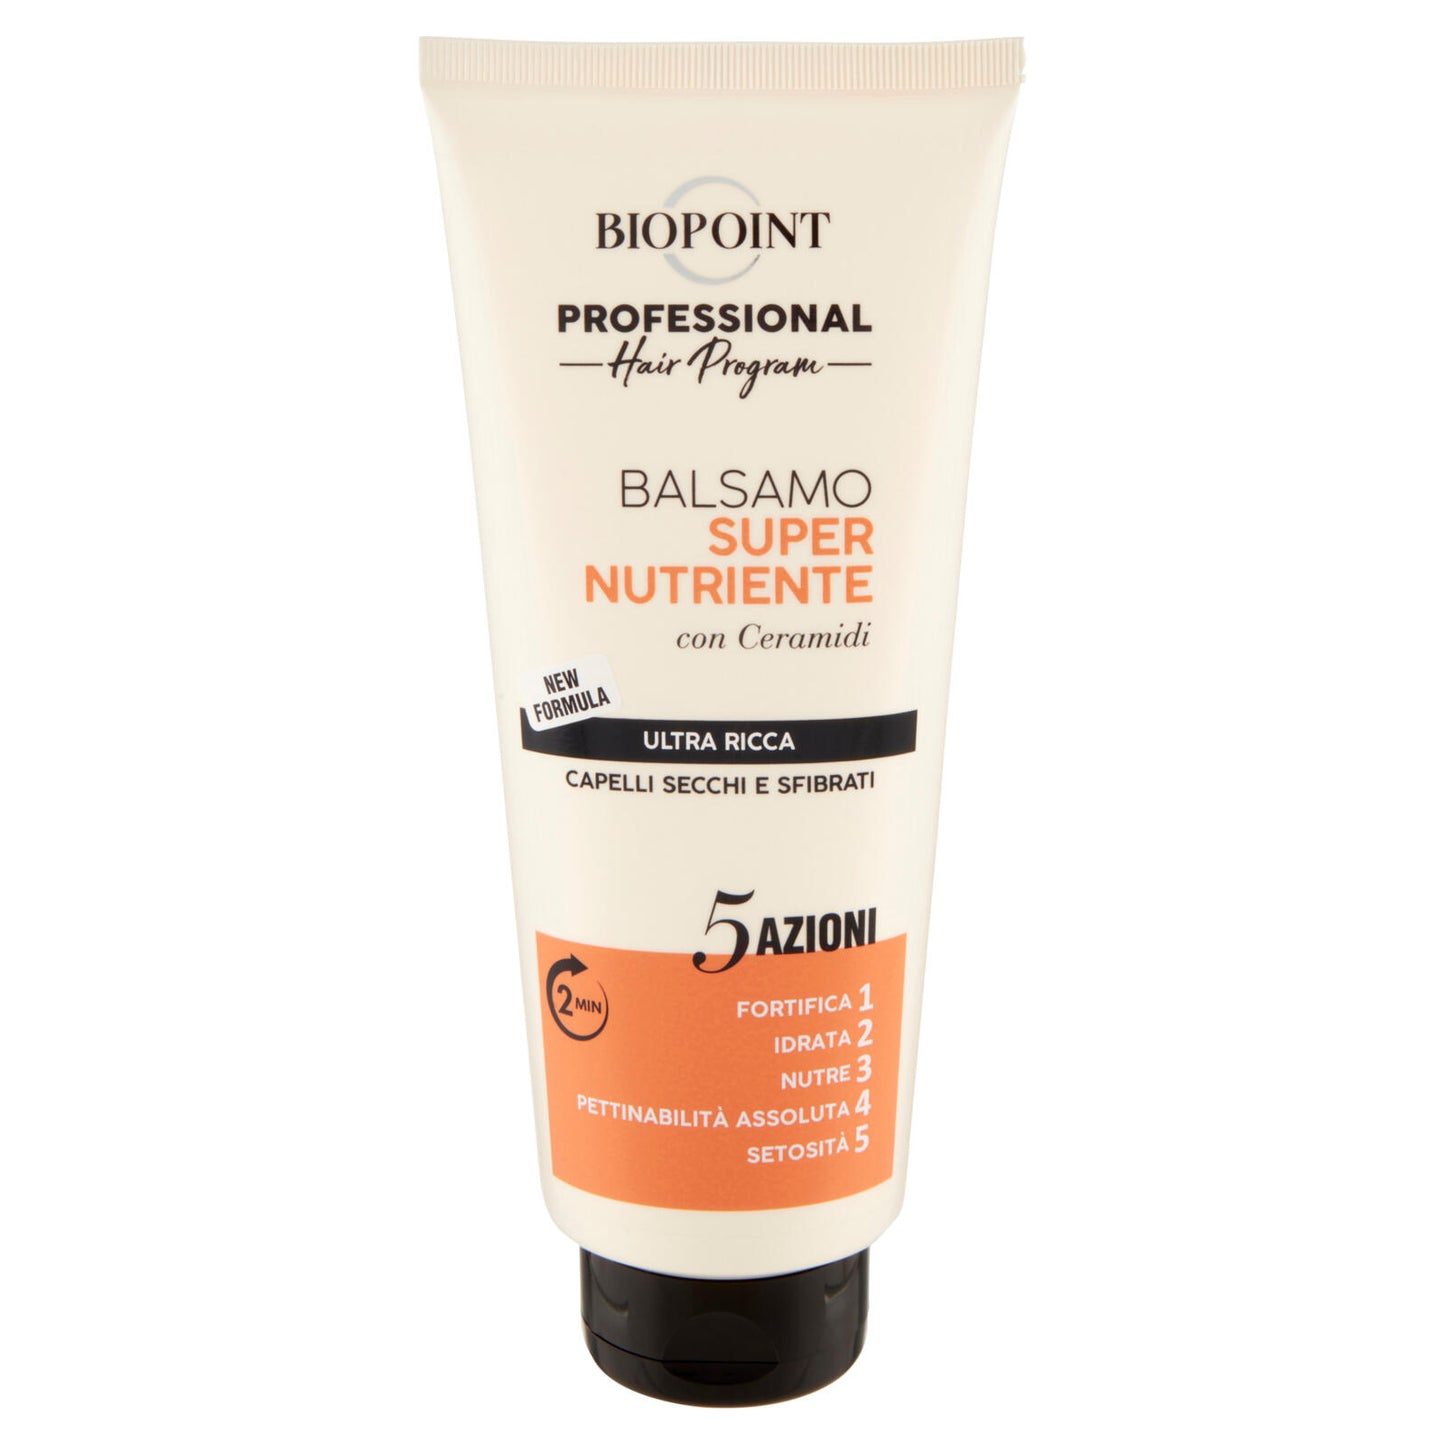 Biopoint Professional Hair Program Balsamo Super Nutriente 350 ml